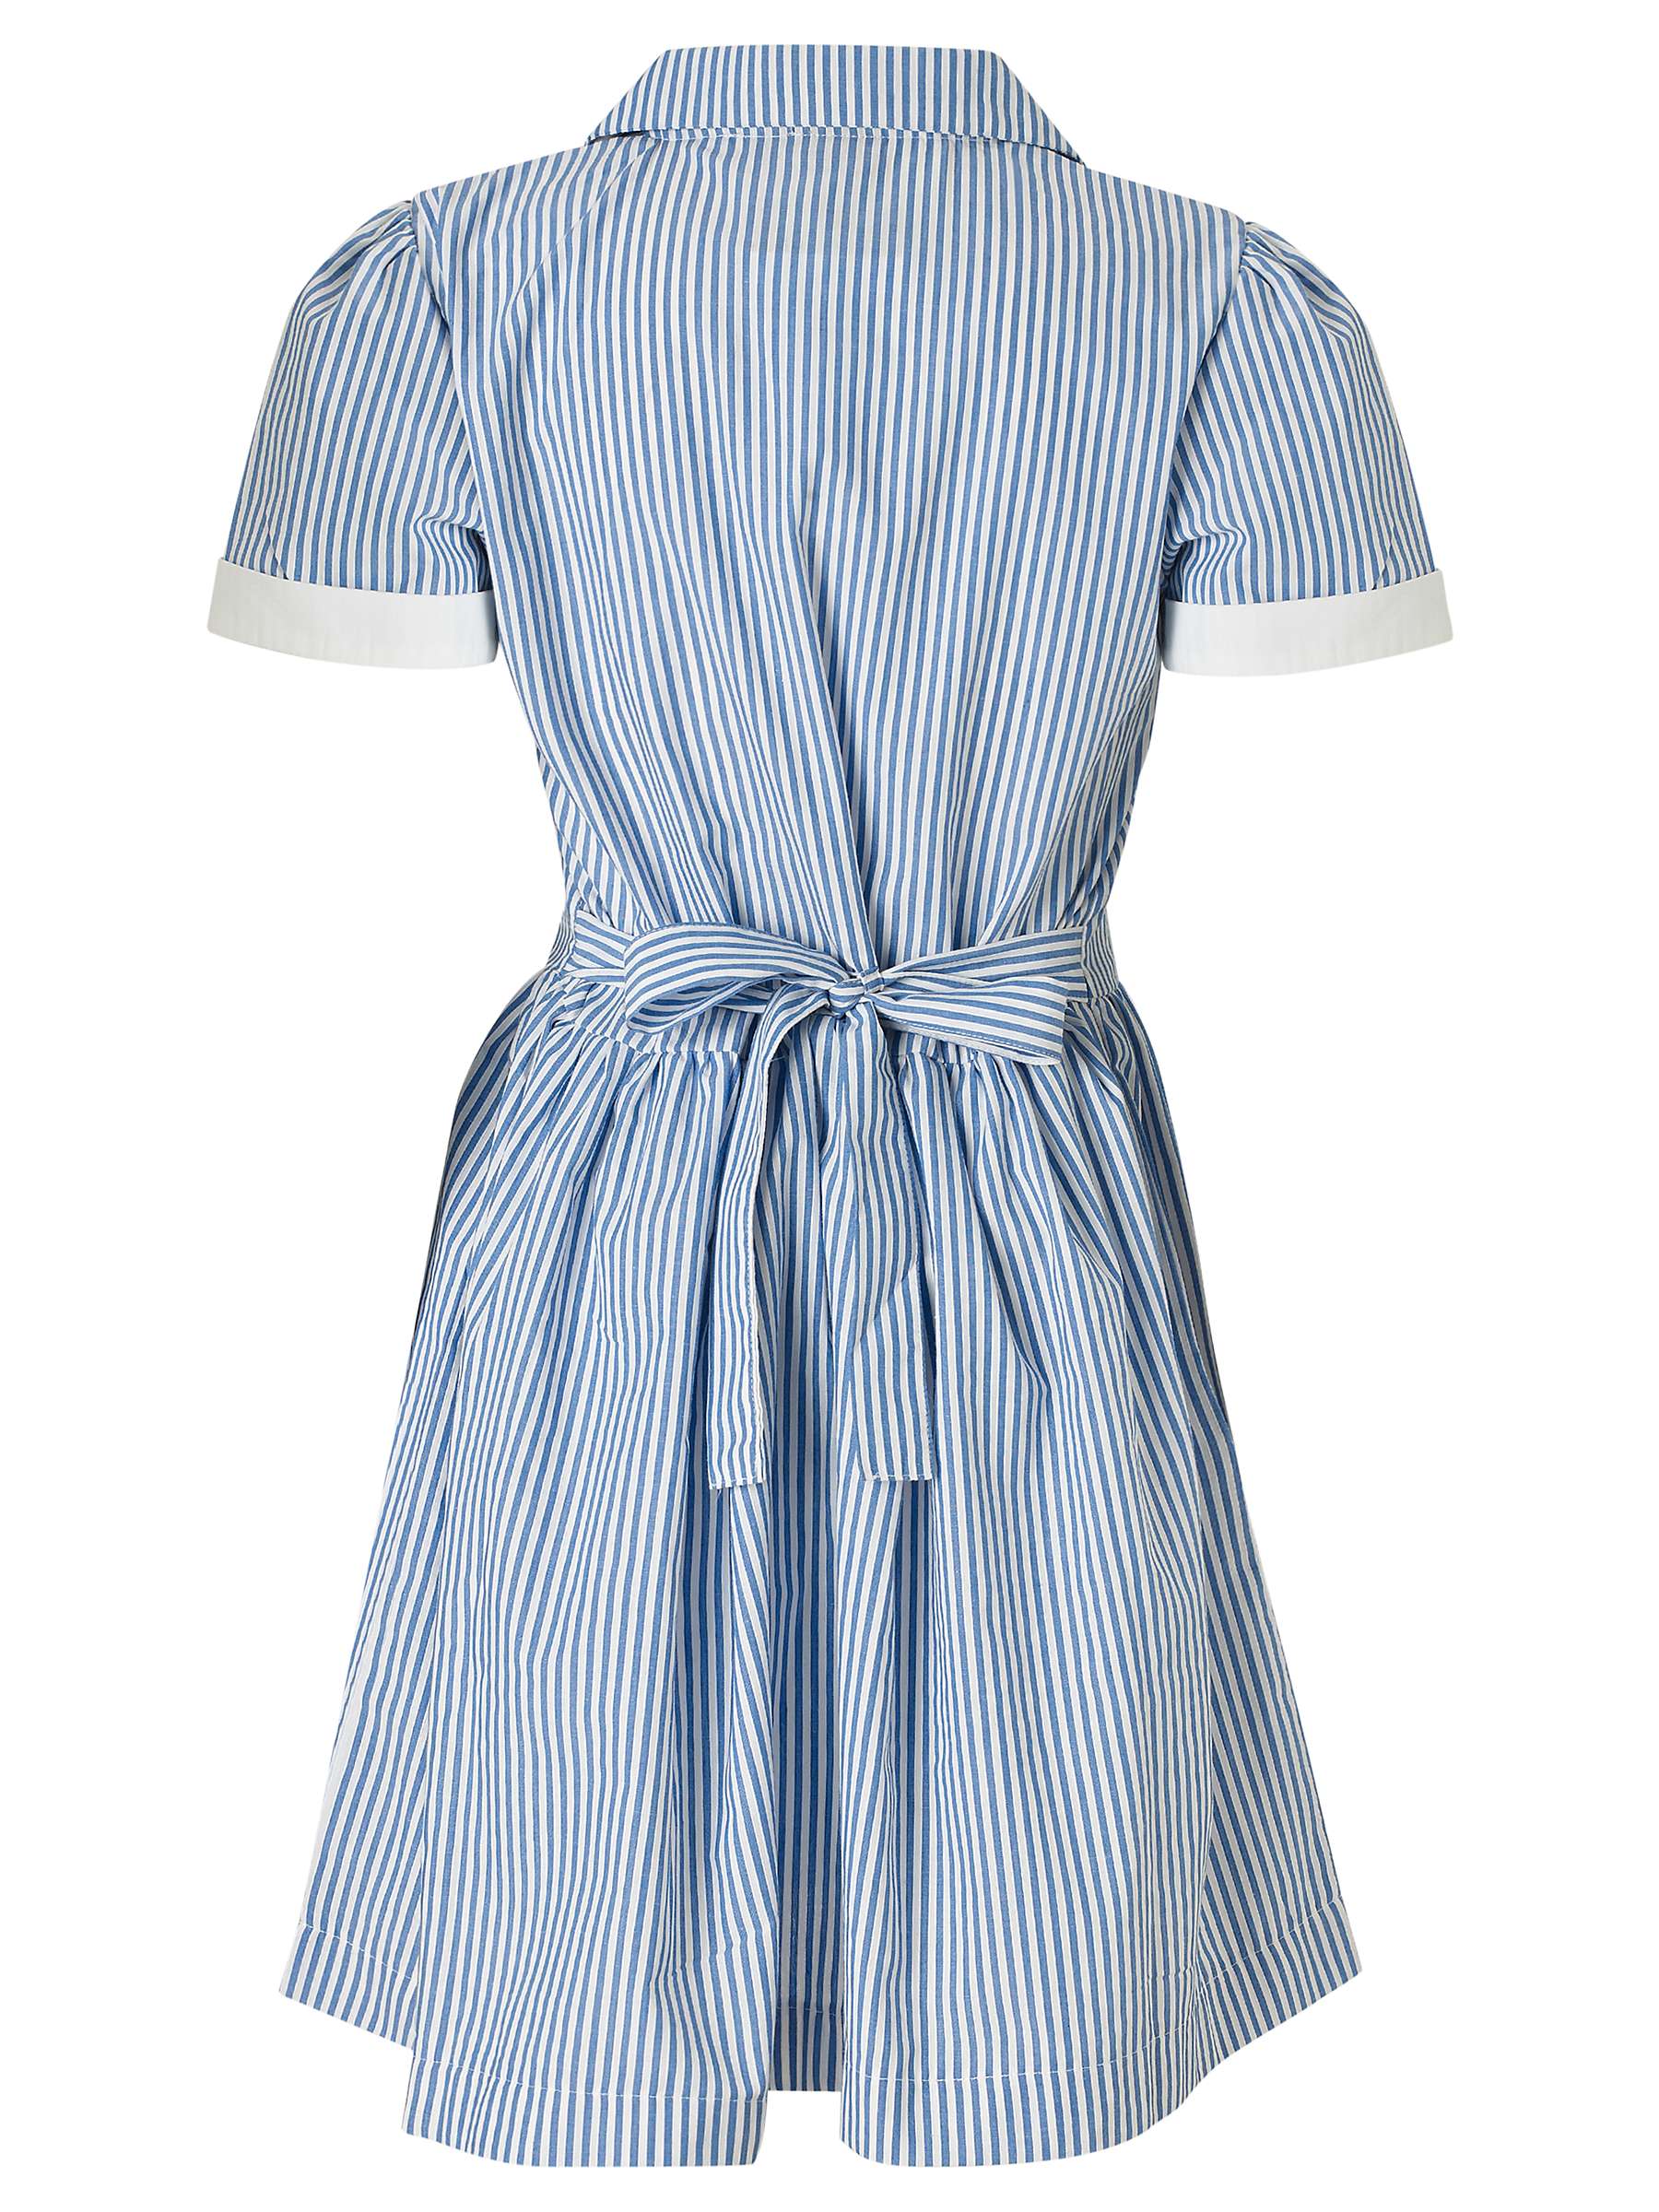 Buy School Girls' Summer Dress, Blue/White Online at johnlewis.com